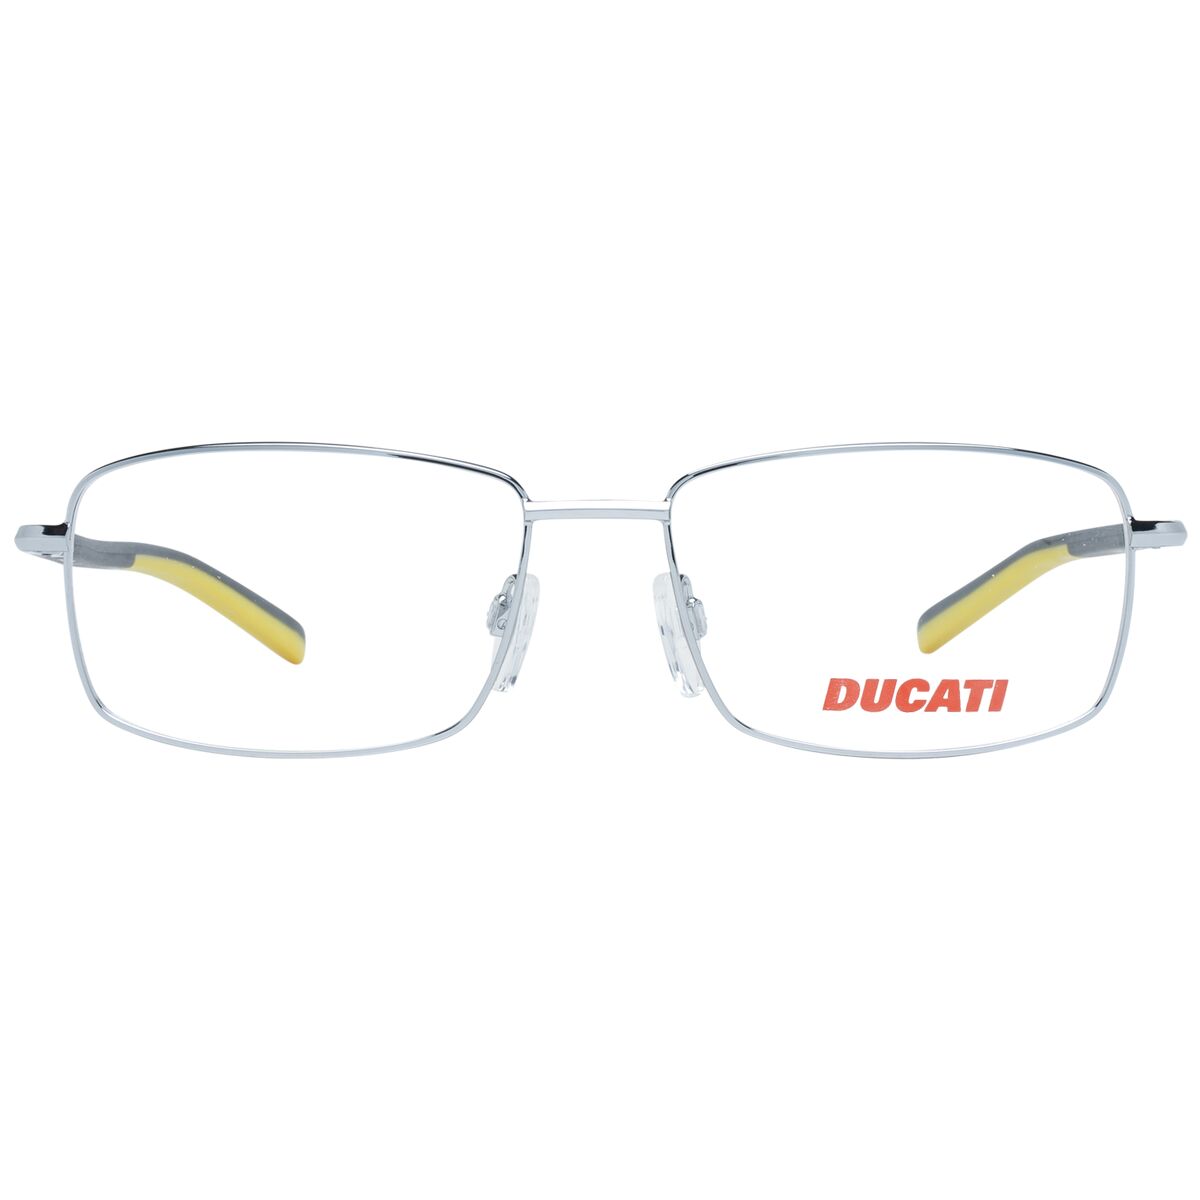 Kaufe Brillenfassung Ducati DA3002 55900 bei AWK Flagship um € 67.00